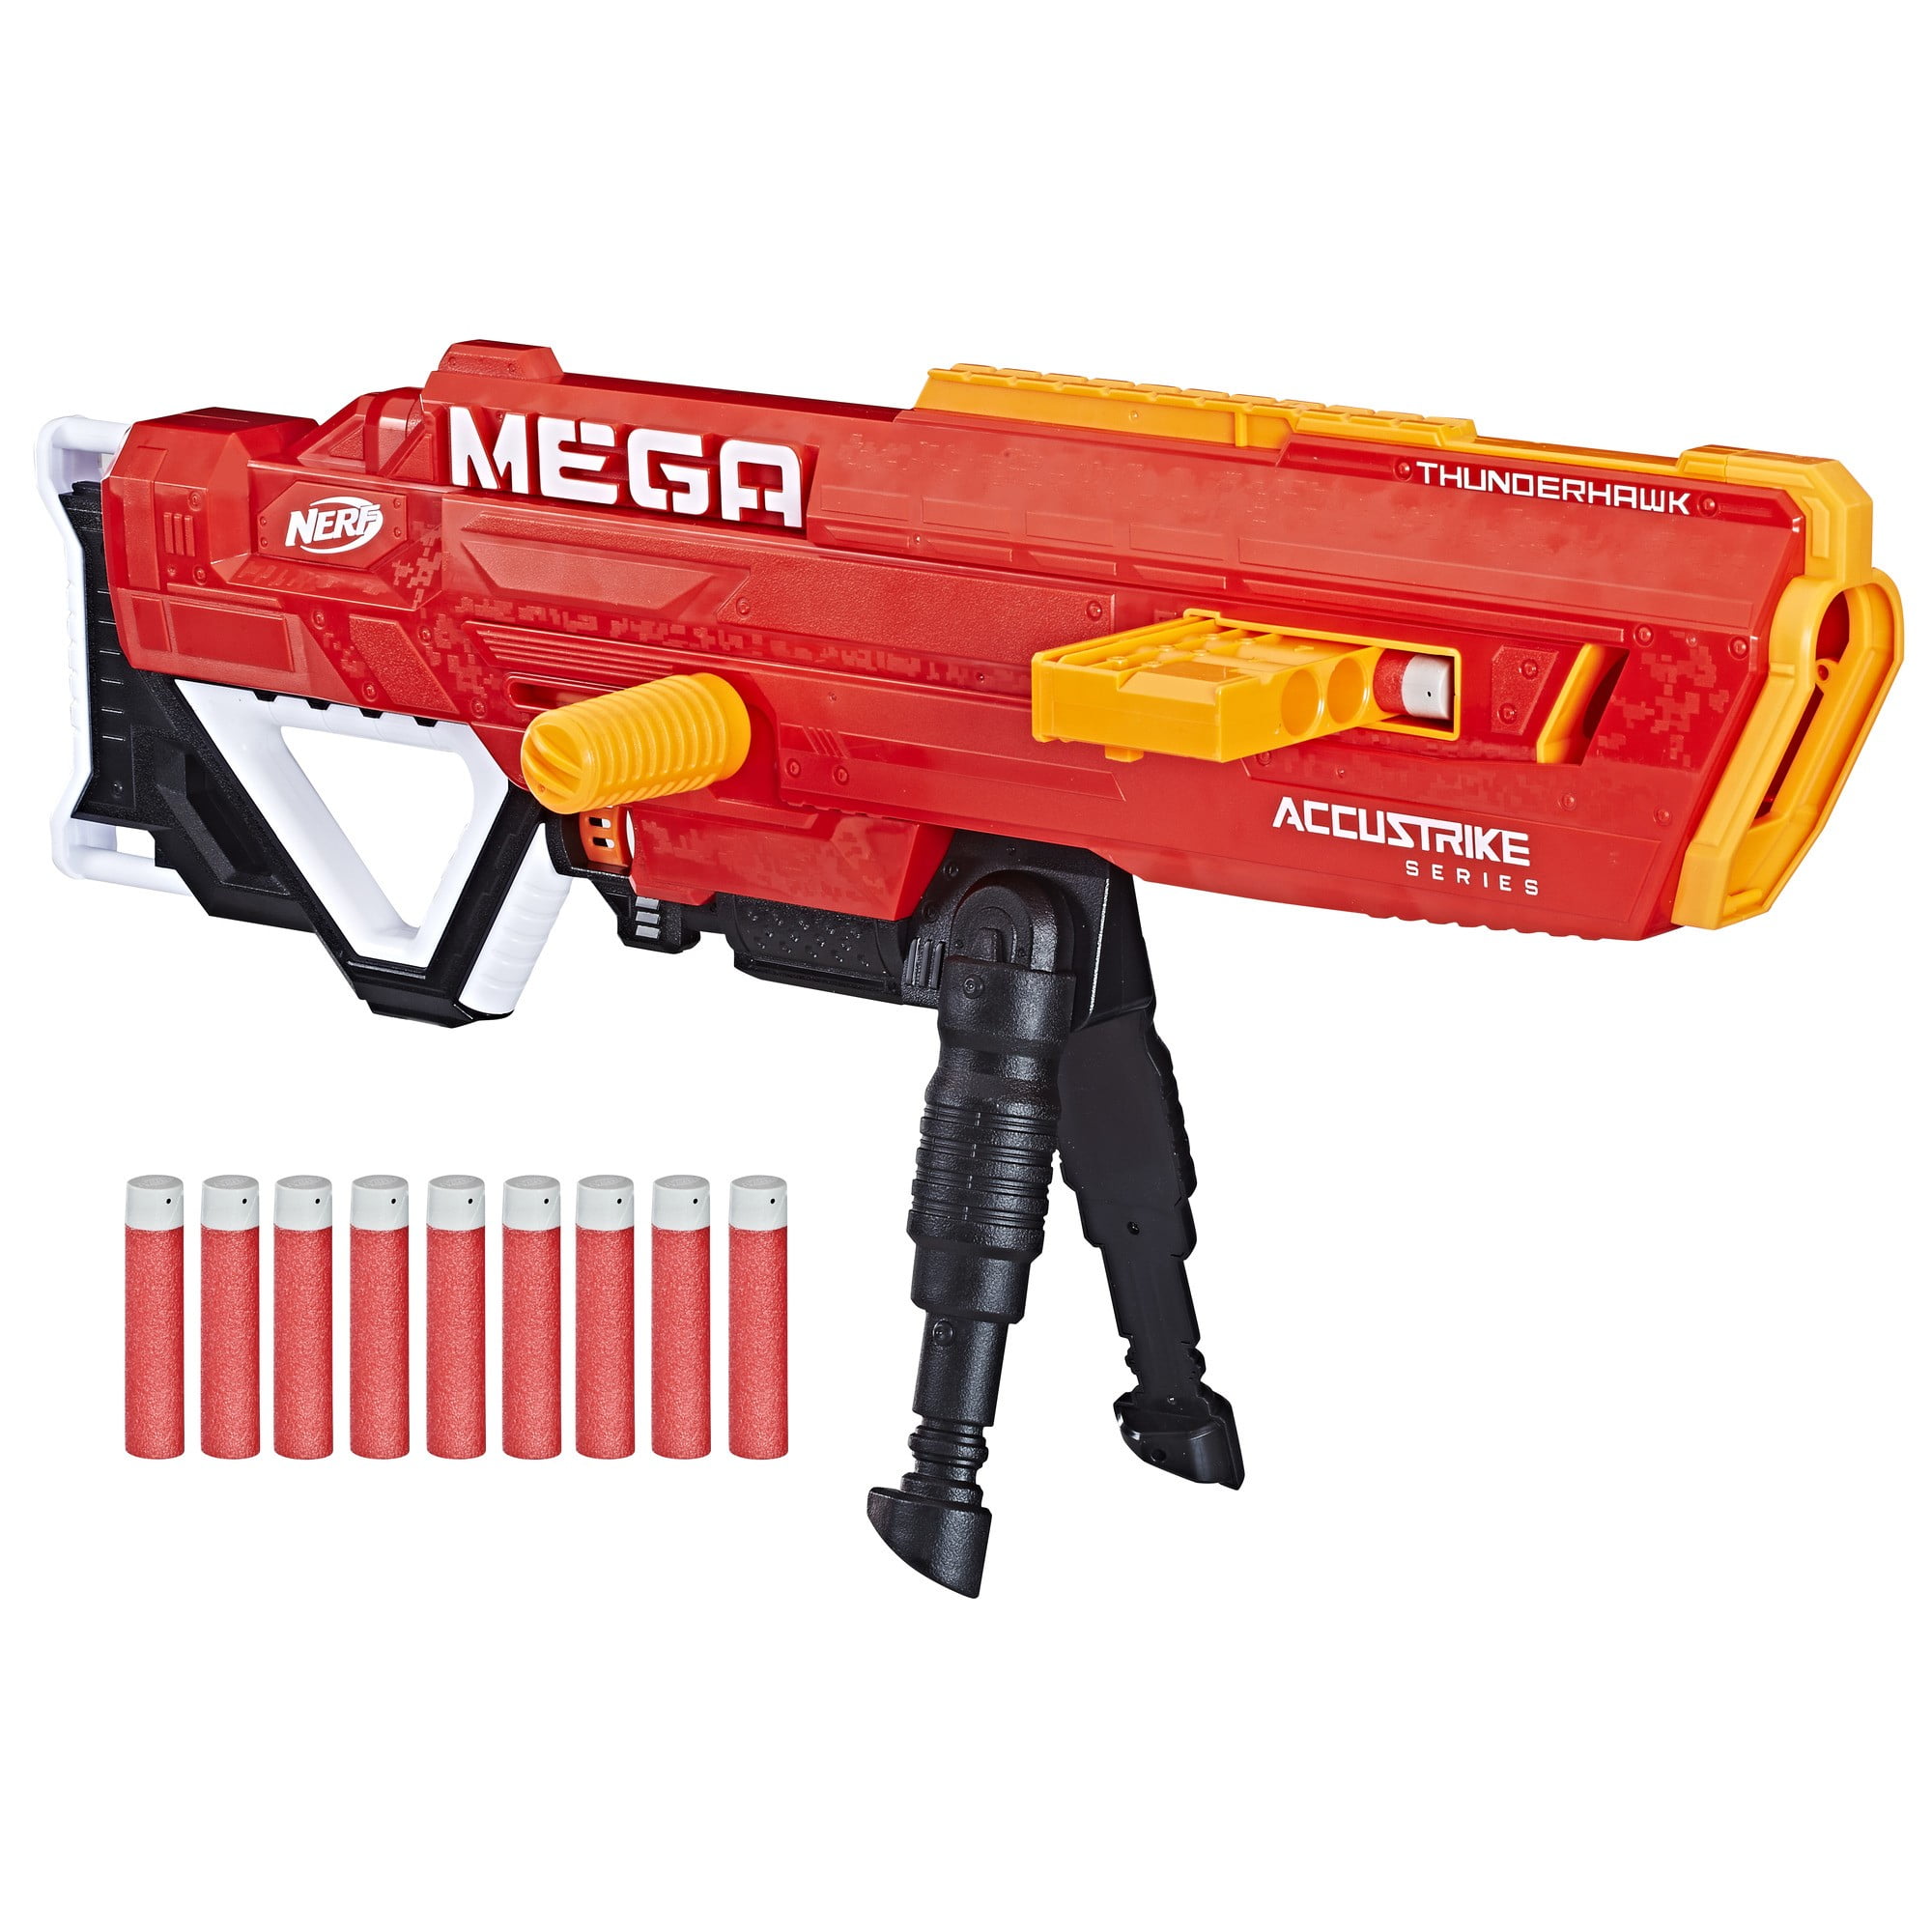 NERF N-strike Elite Mega Centurion Toy Gun Blaster 100ft Range With 6 Darts for sale online 